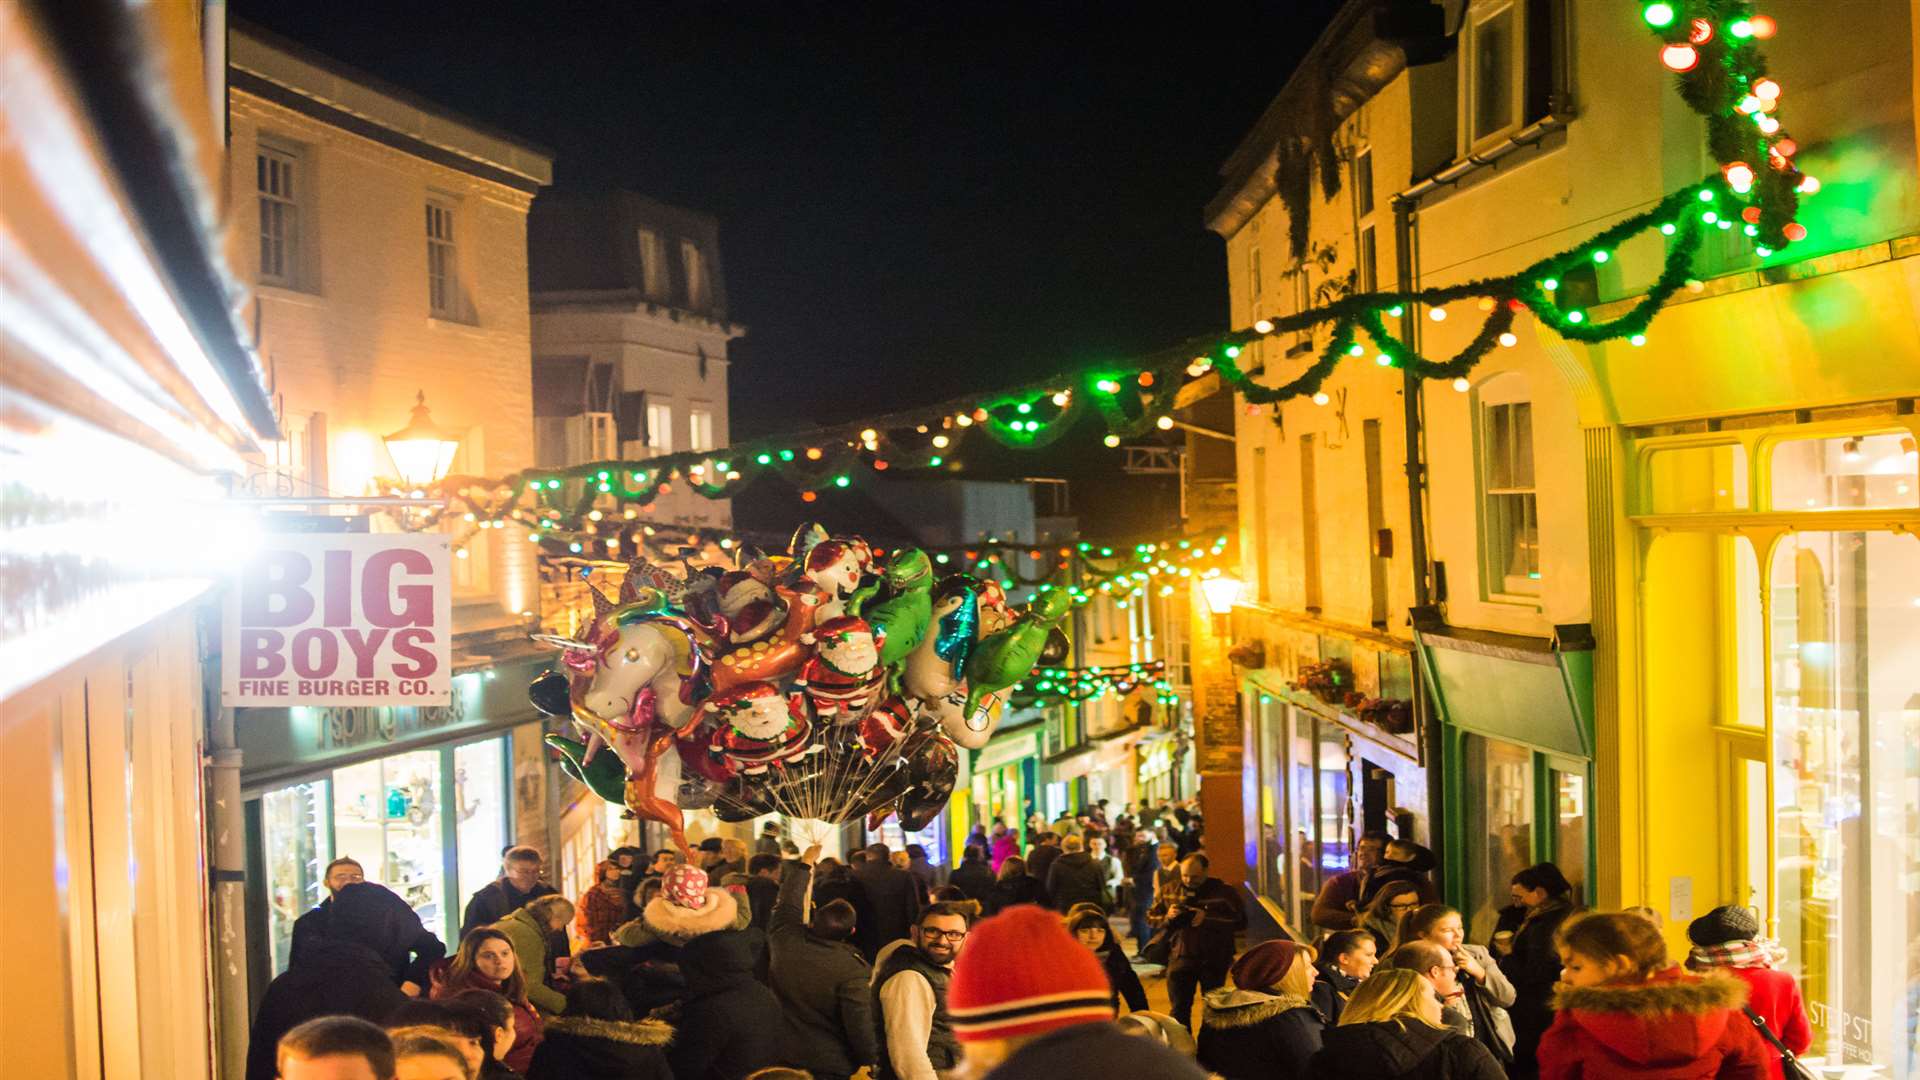 The Folkestone Christmas lights will herald the start of the Folkestone Book Festival